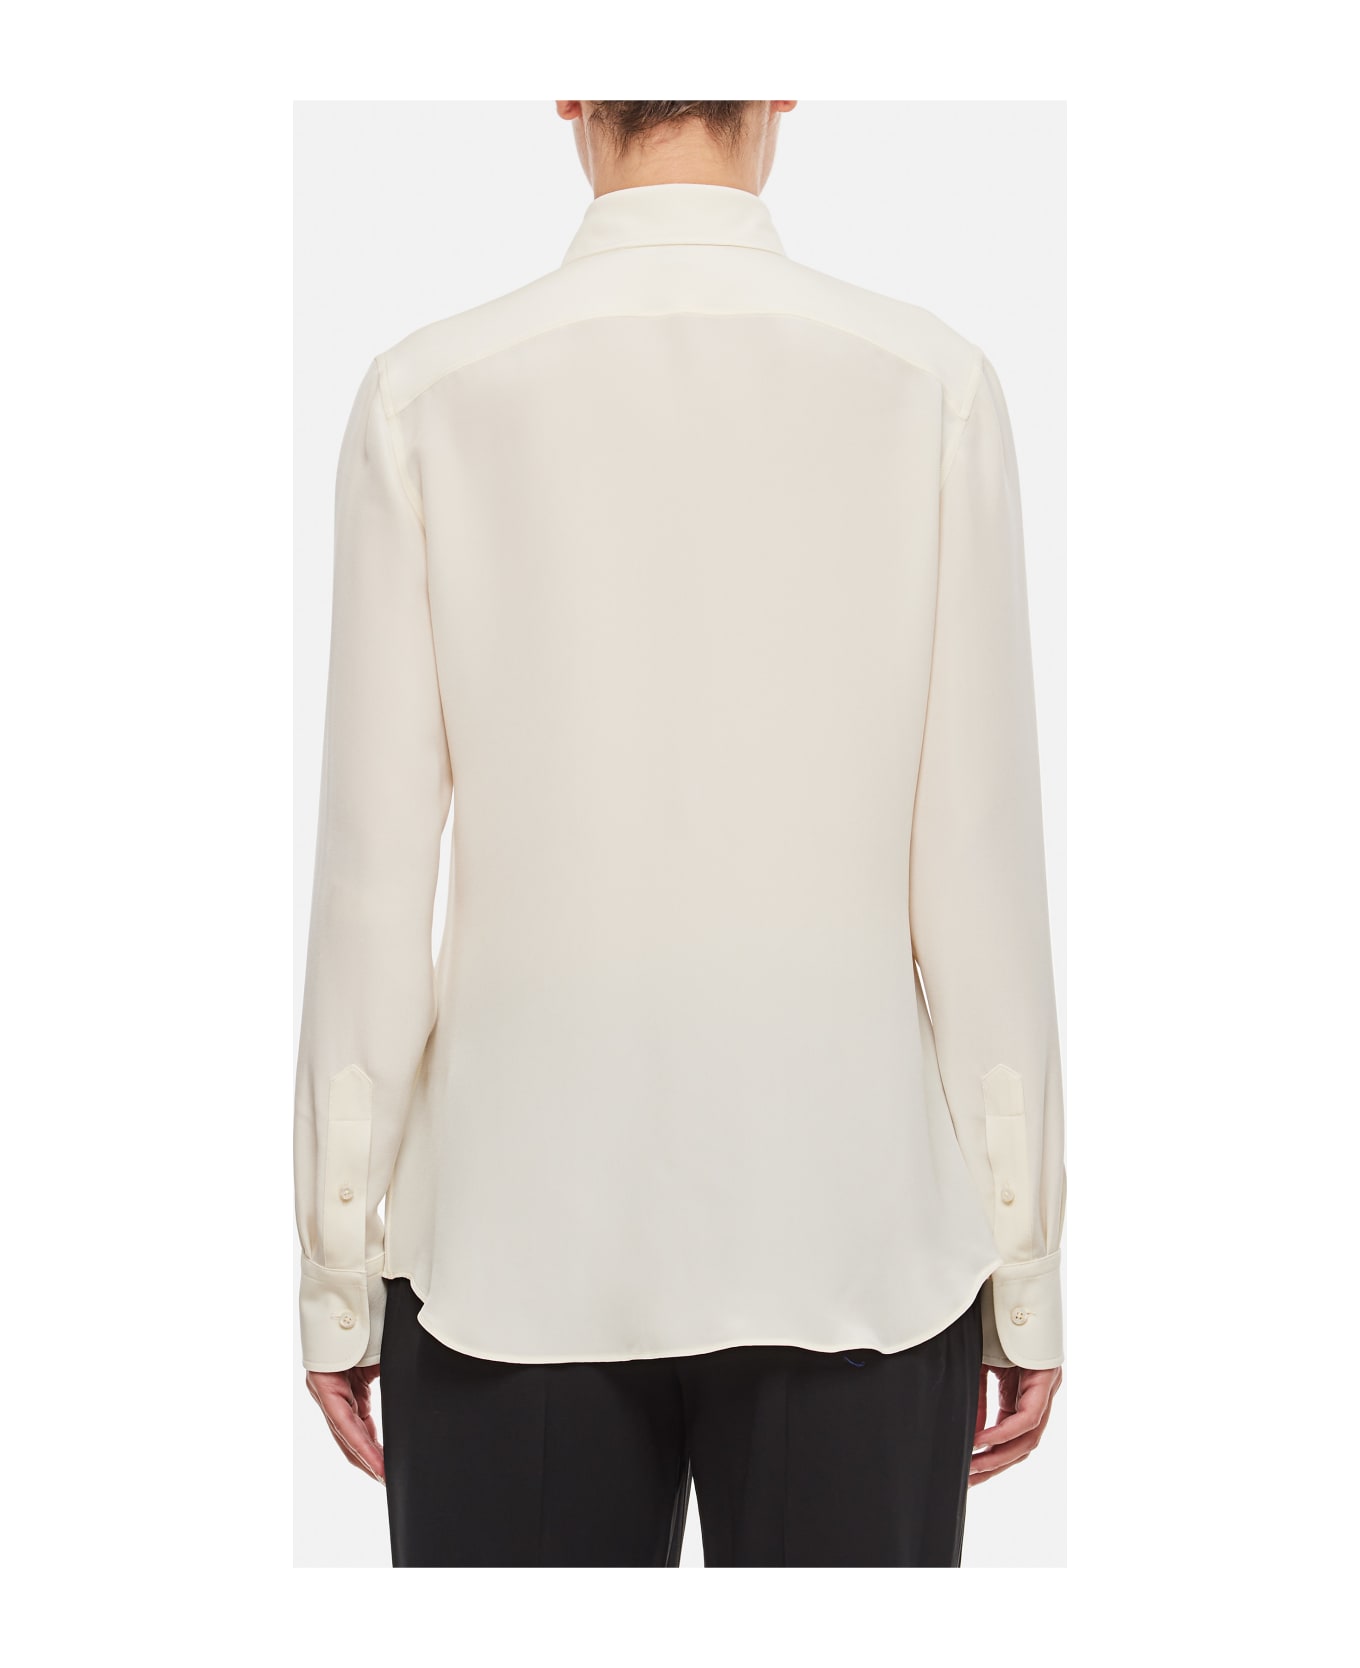 Ralph Lauren Charmain Button Front Shirt - White シャツ